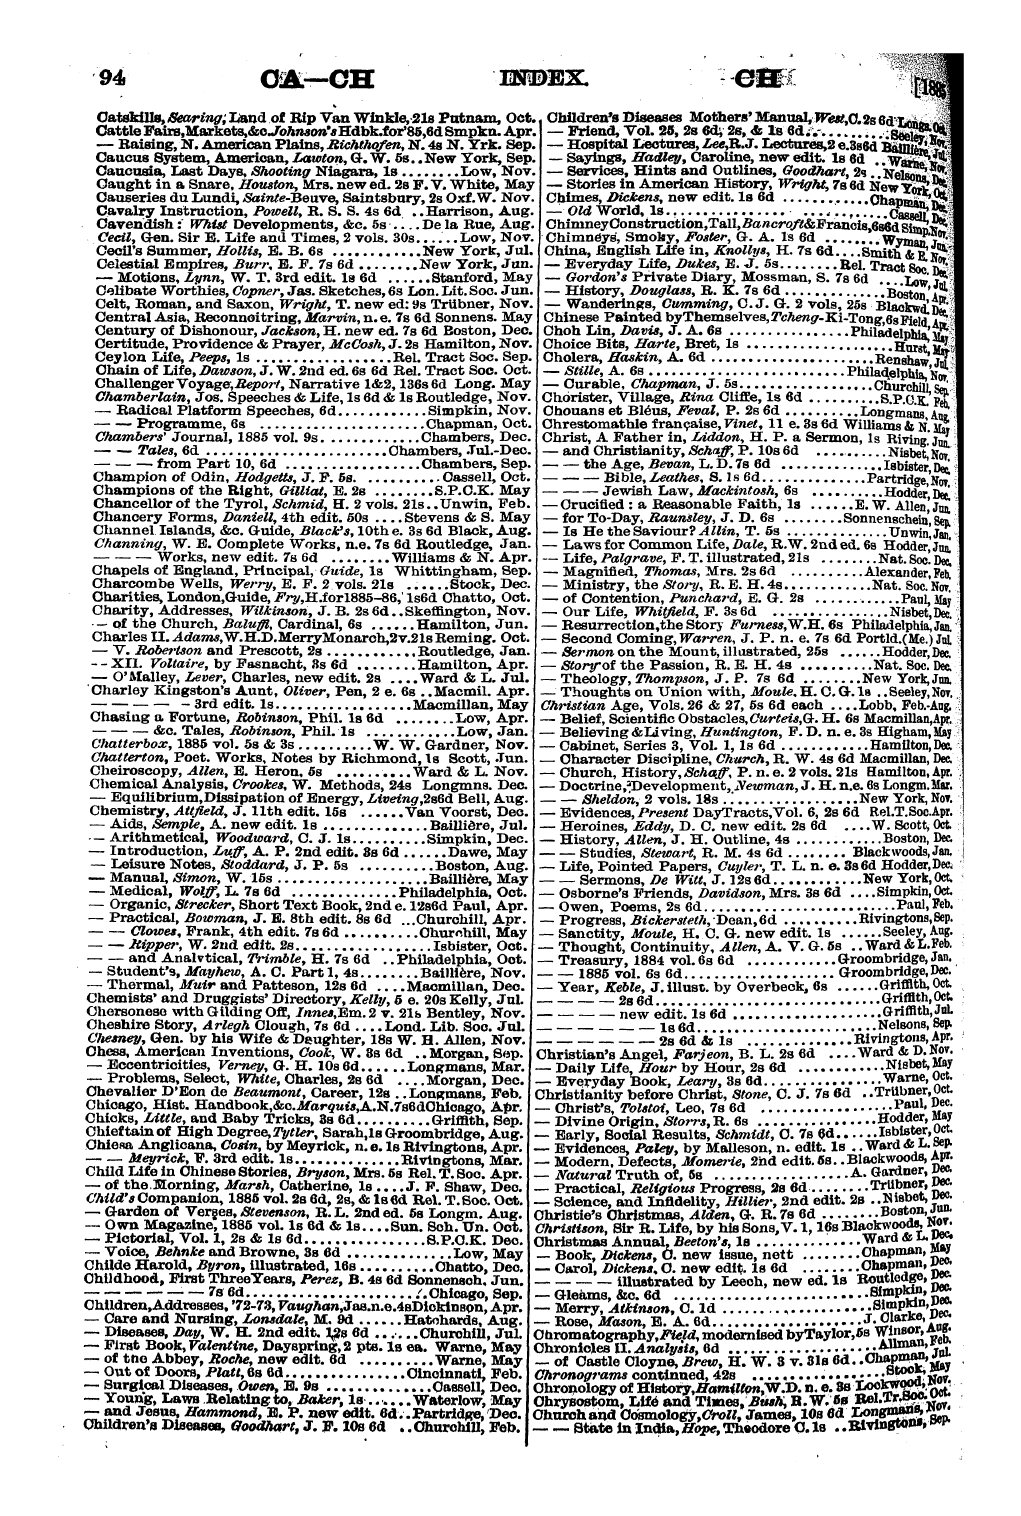 Publishers’ Circular (1880-1890): jS F Y, 1st edition: 96